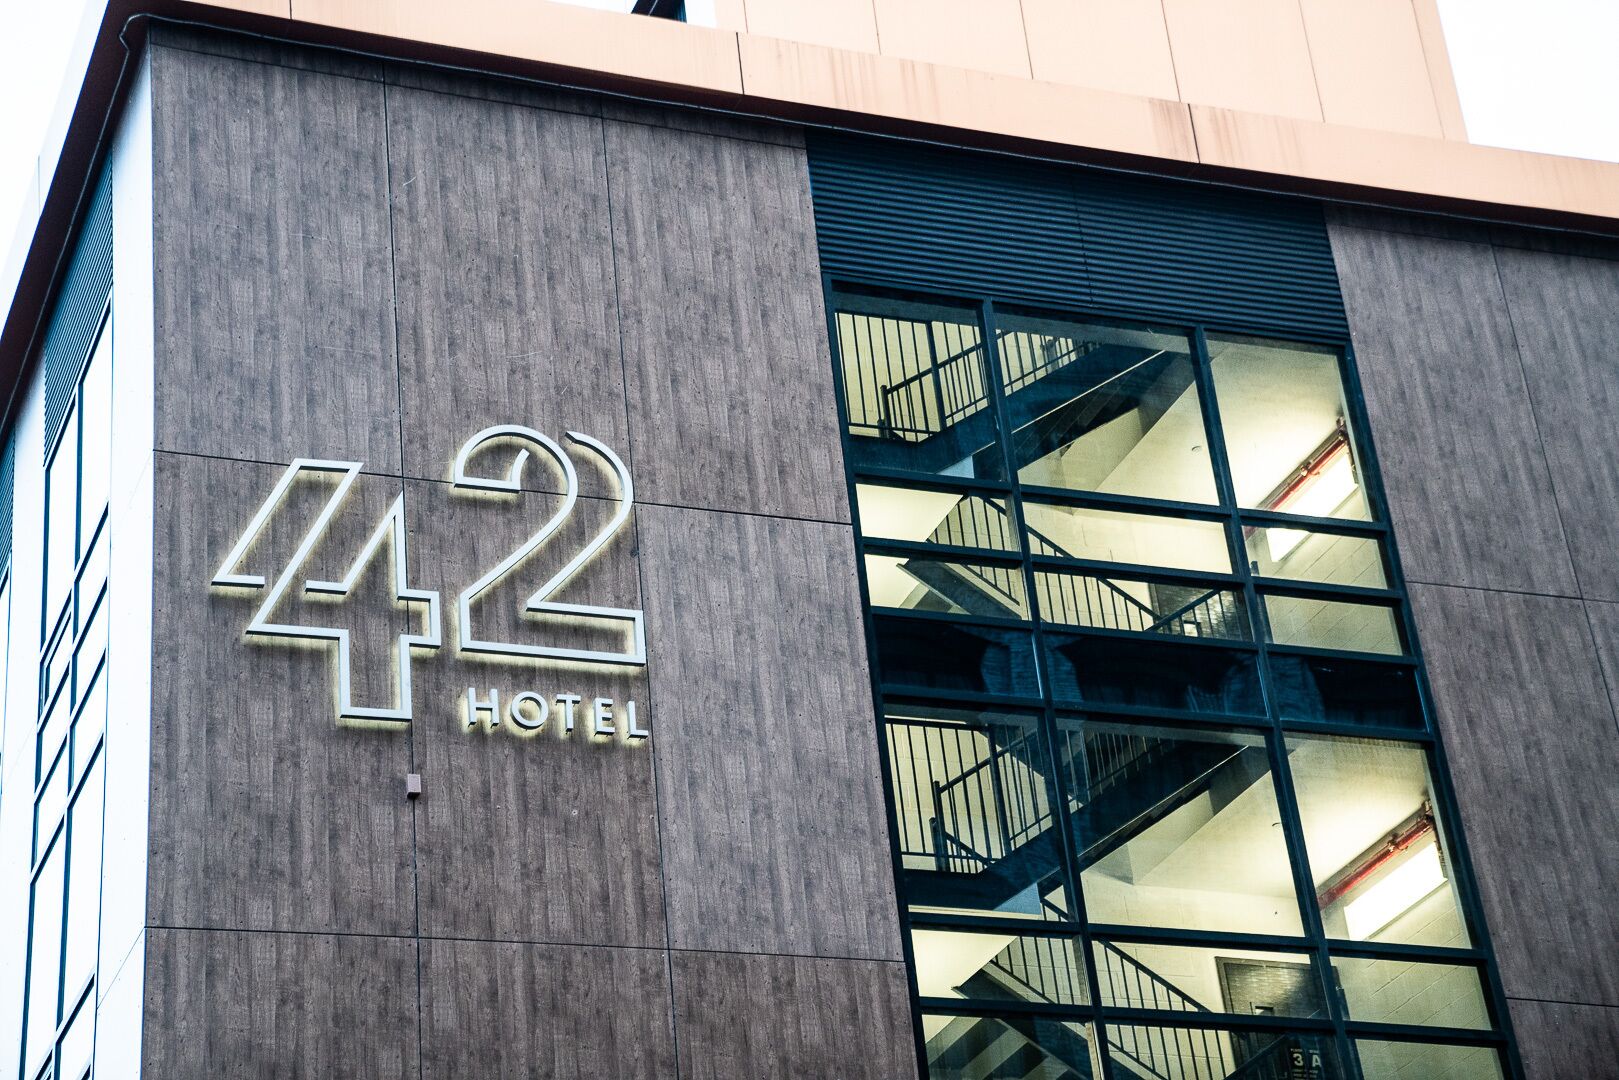 42 Hotel